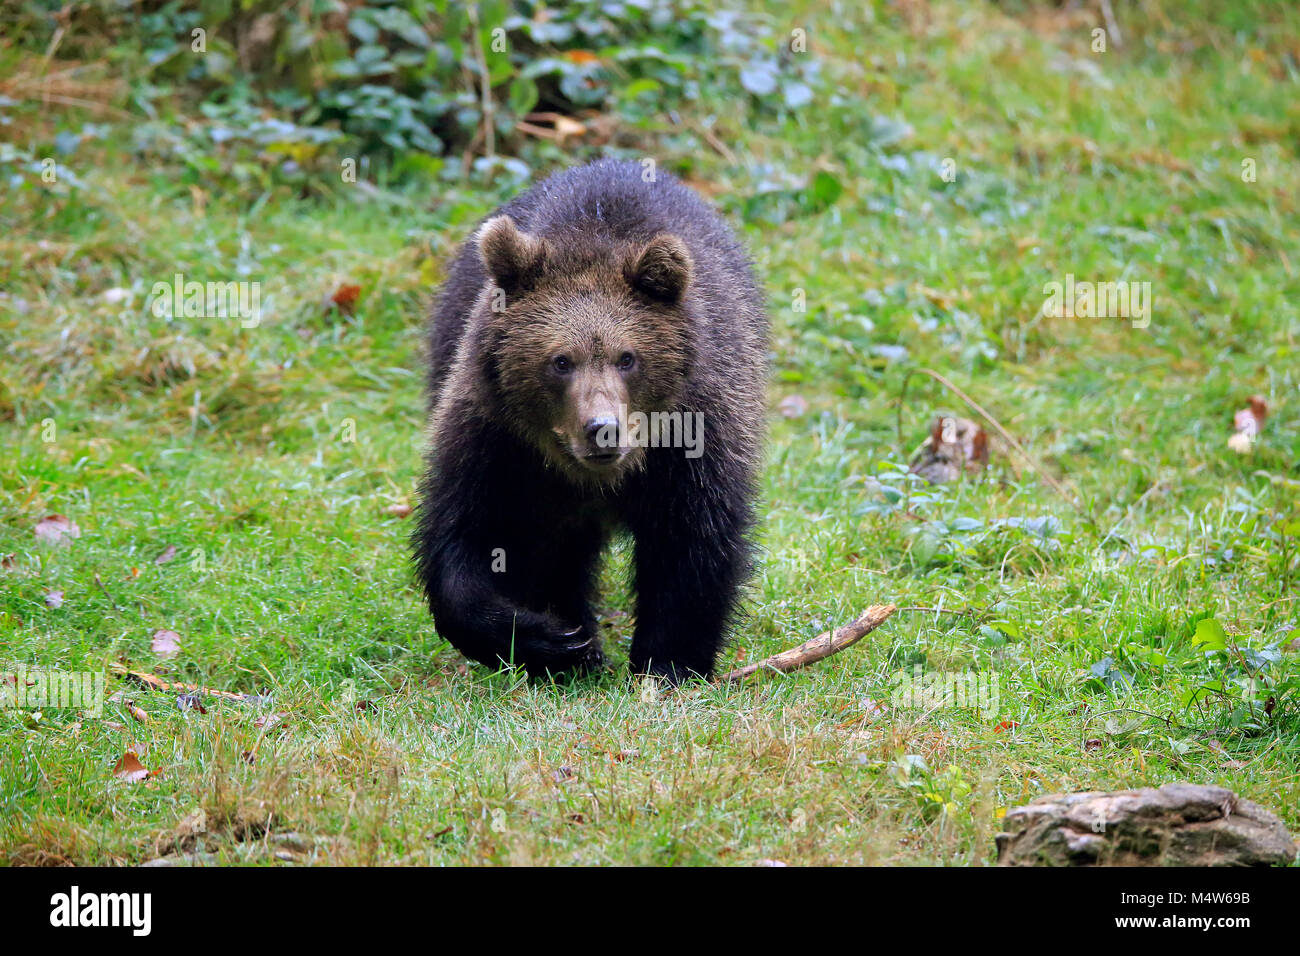 Unione l'orso bruno (Ursus arctos arctos), giovane animale in esecuzione, Parco Nazionale della Foresta Bavarese, Germania Foto Stock